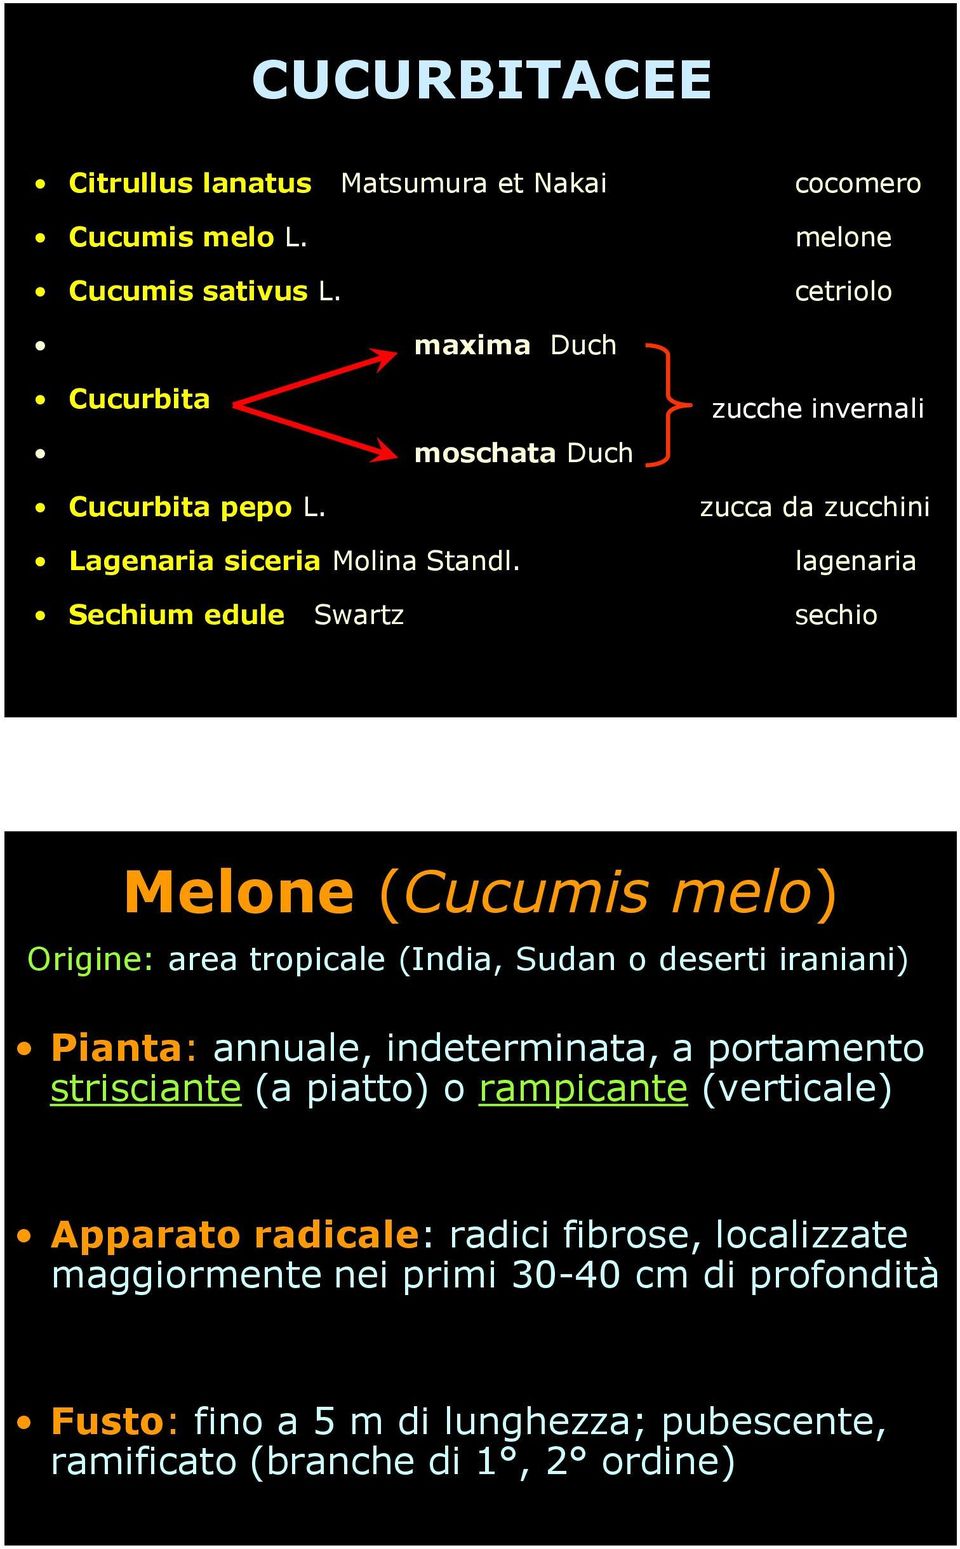 lagenaria Sechium edule Swartz sechio Melone (Cucumis melo) Origine: area tropicale (India, Sudan o deserti iraniani) Pianta: annuale, indeterminata, a